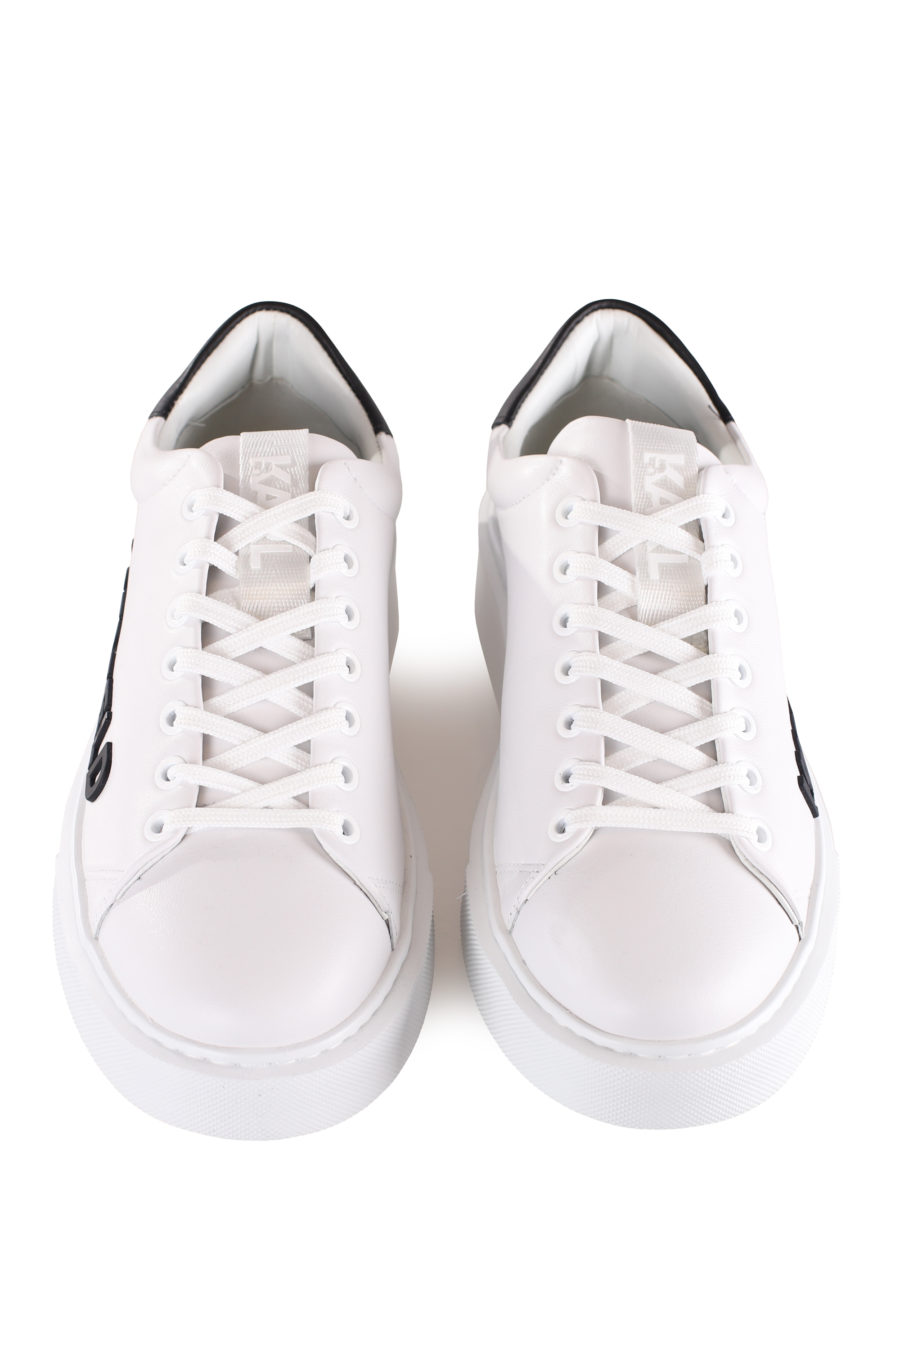 Zapatillas blancas con maxi logo en goma - IMG 9591